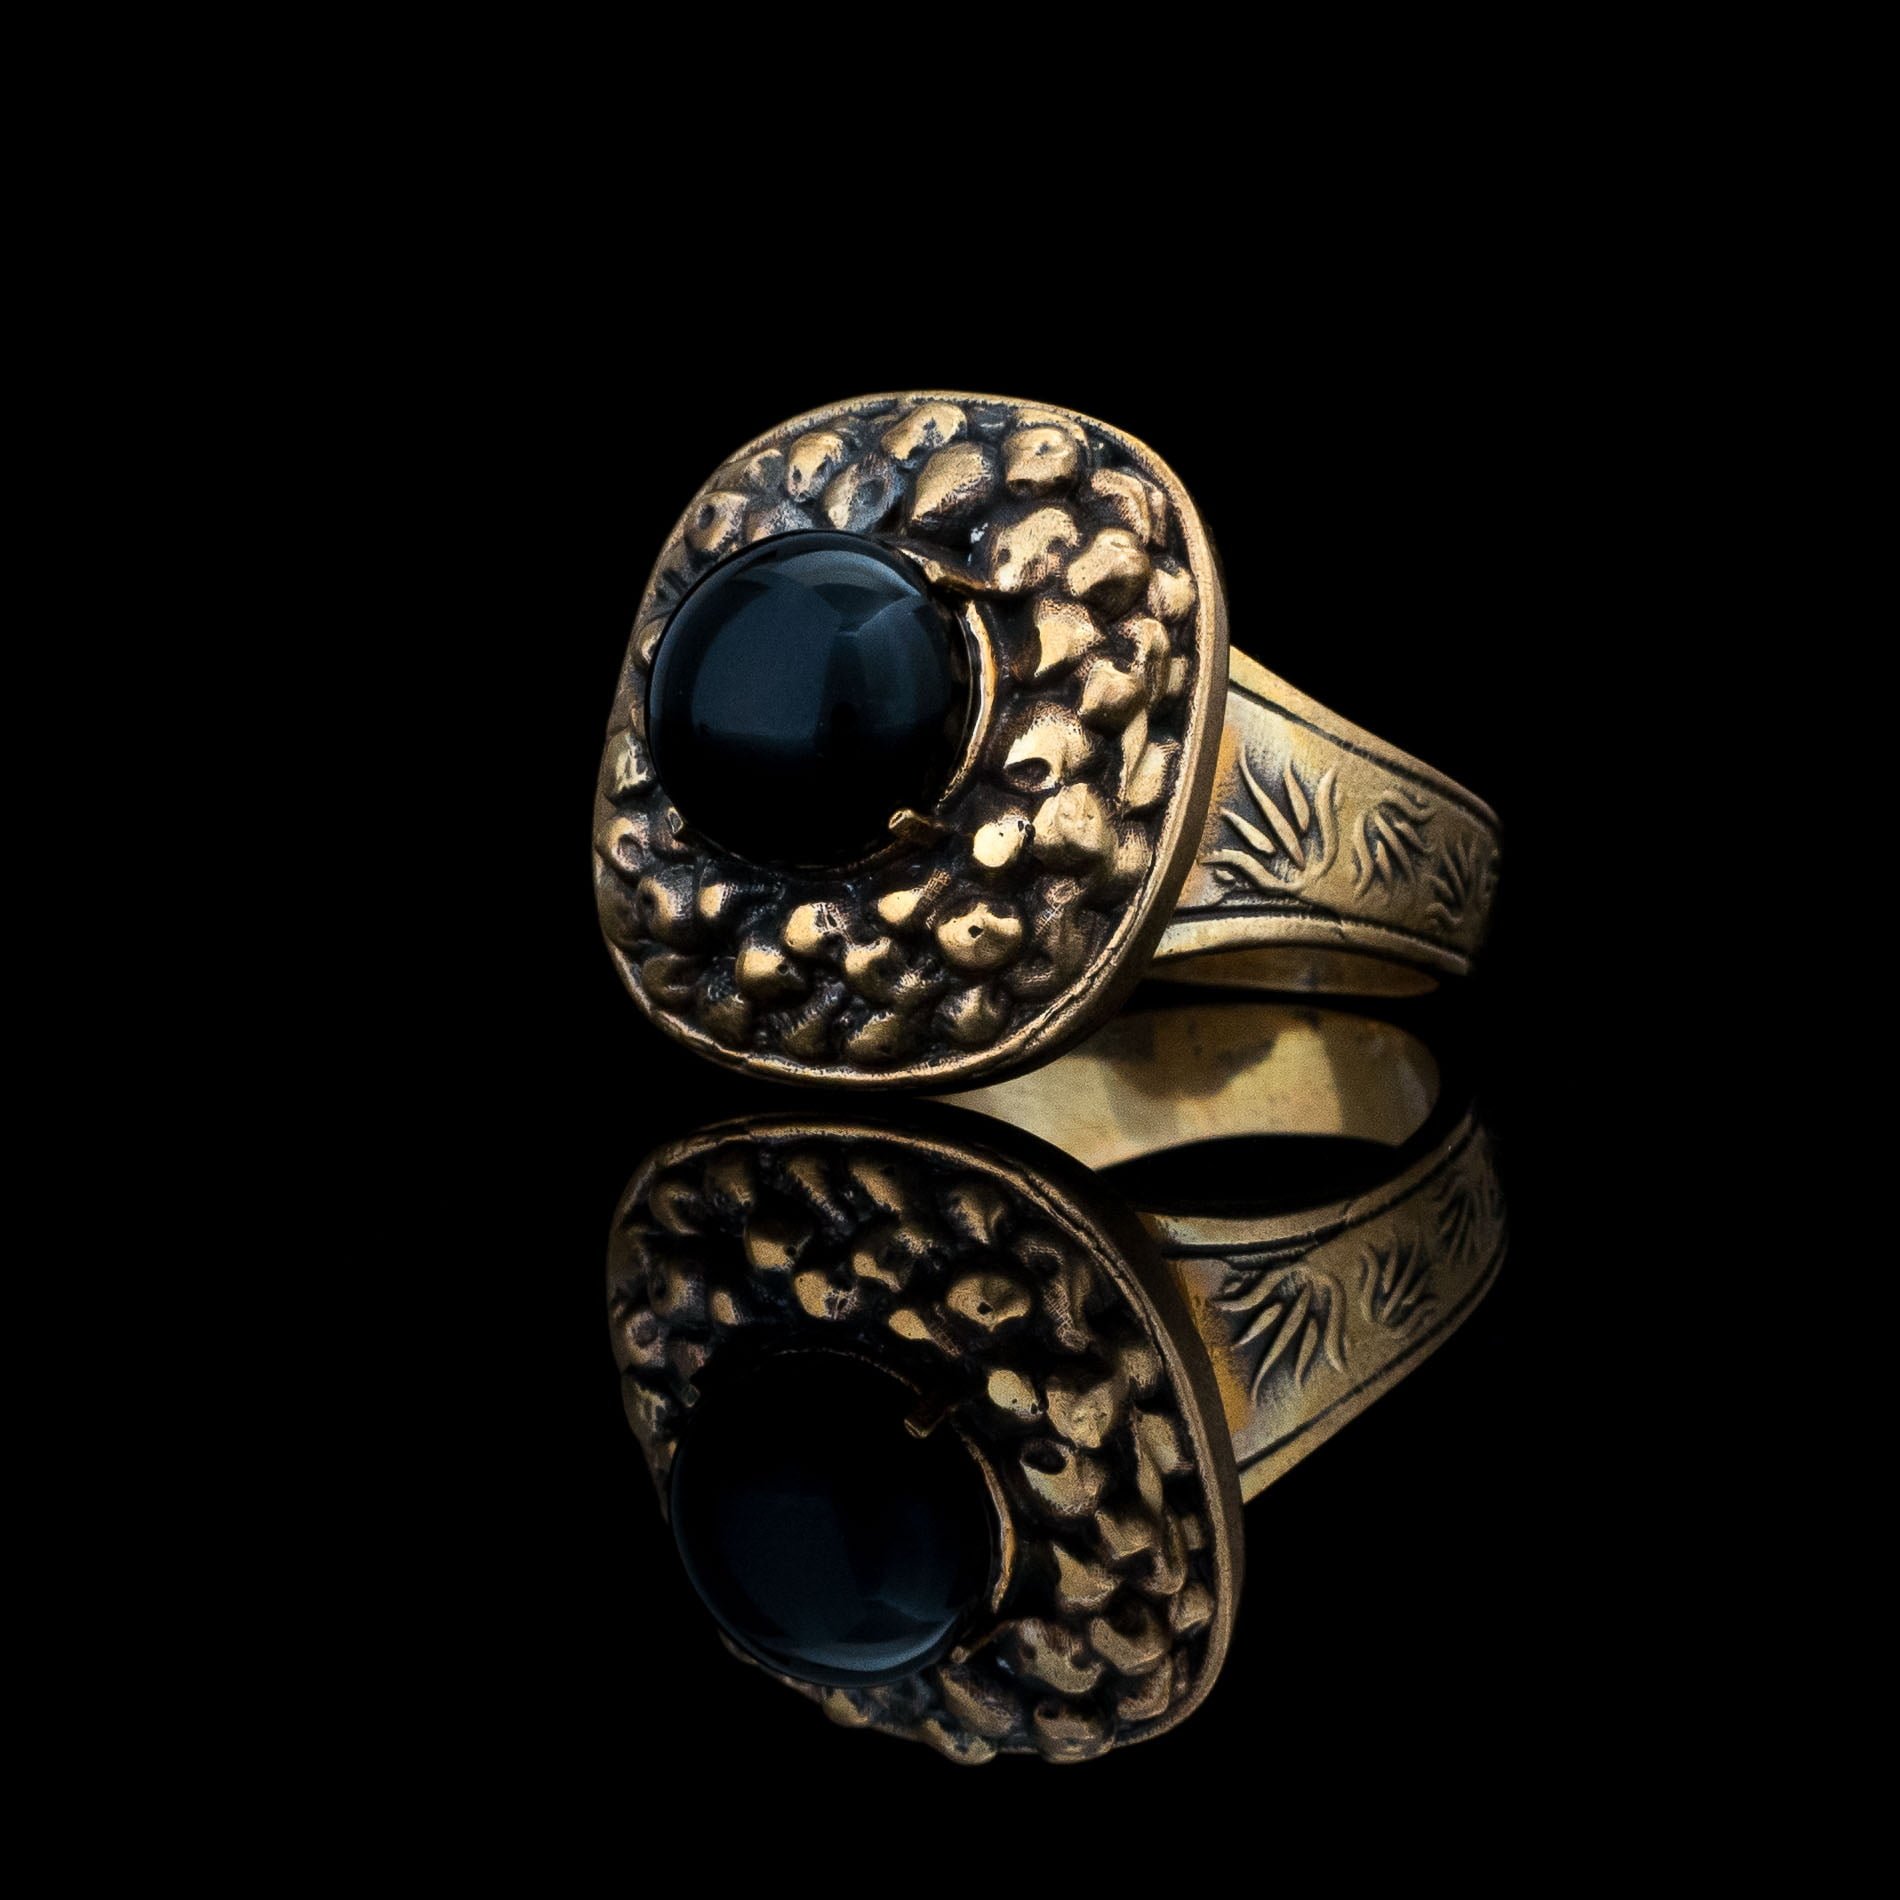 Havel’s Ring from Dark Souls Artifactoria